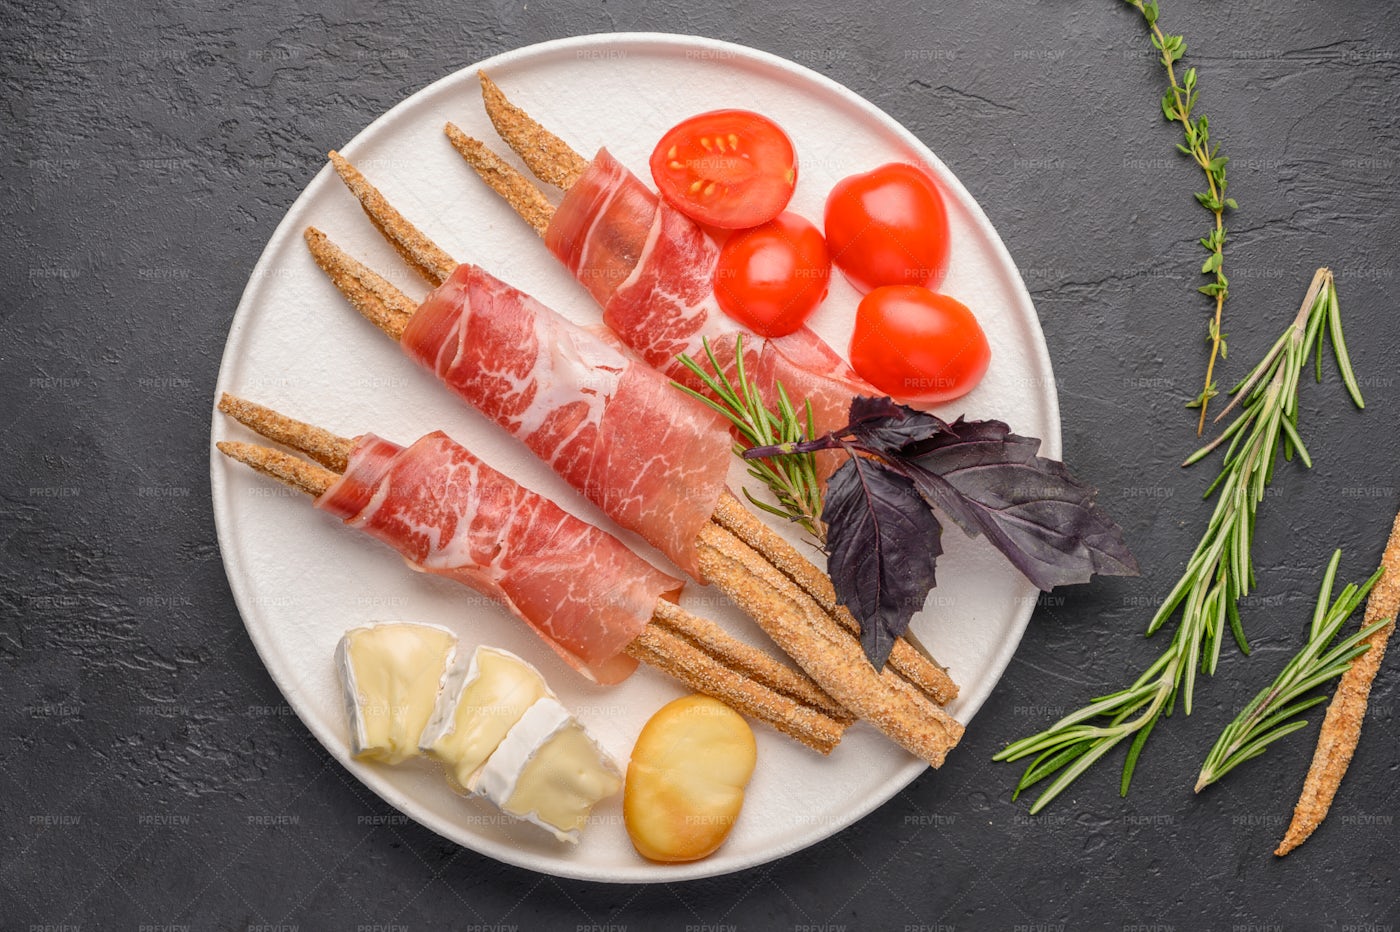 Italian Food On Plate: Stock Photos